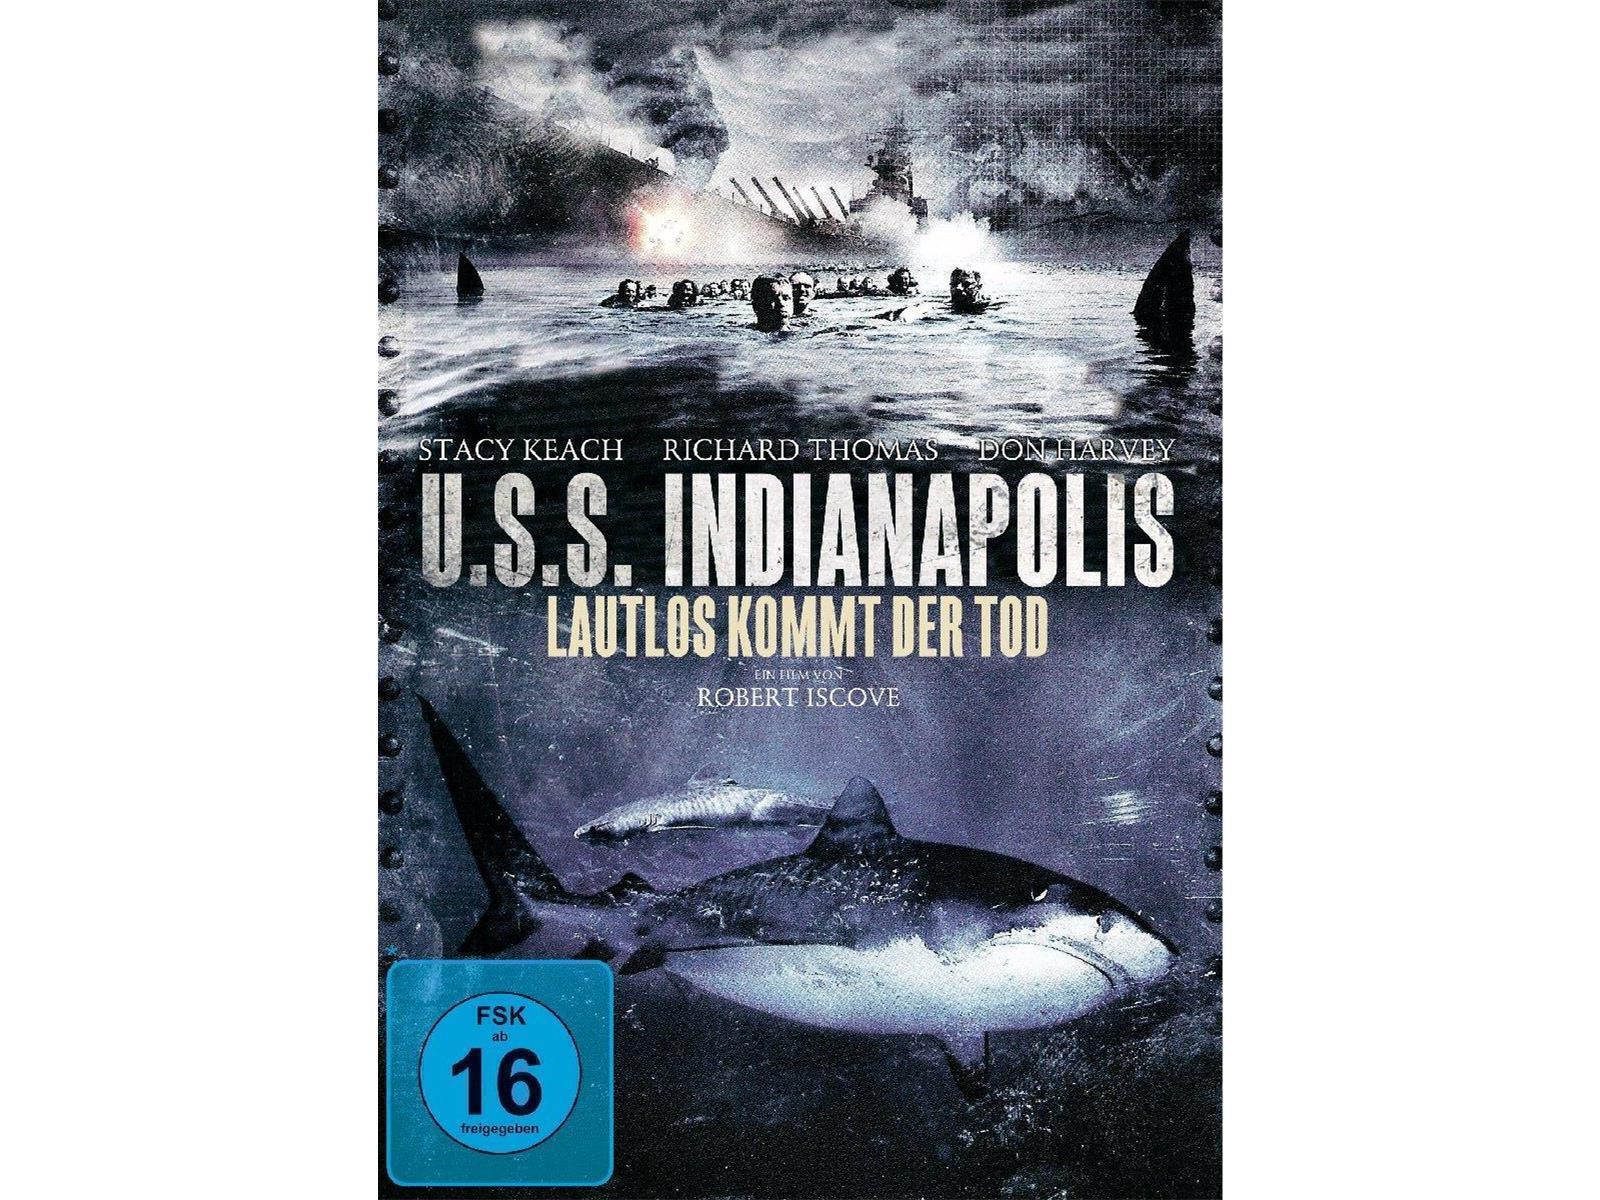 USS Indianapolis Lautlos kommt der Tod